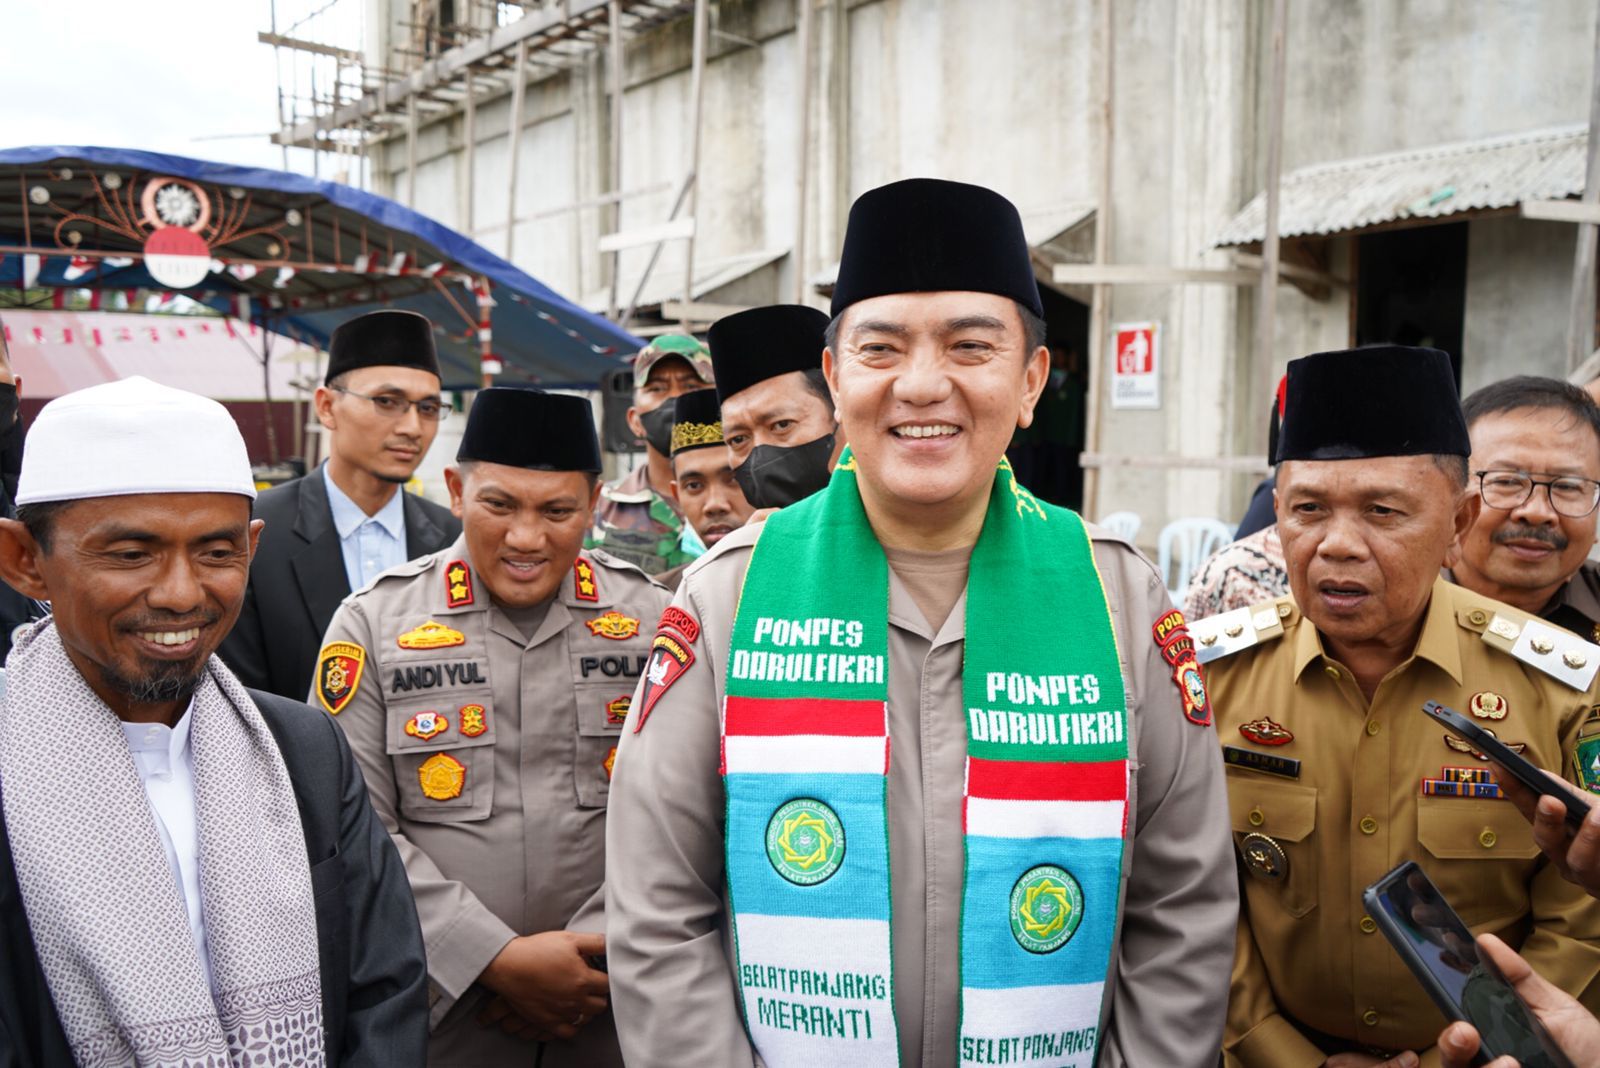 Silaturahmi ke Pondok Pesantren Darul Fikri, Agenda Pertama Kapolda Riau Irjen Iqbal di Meranti